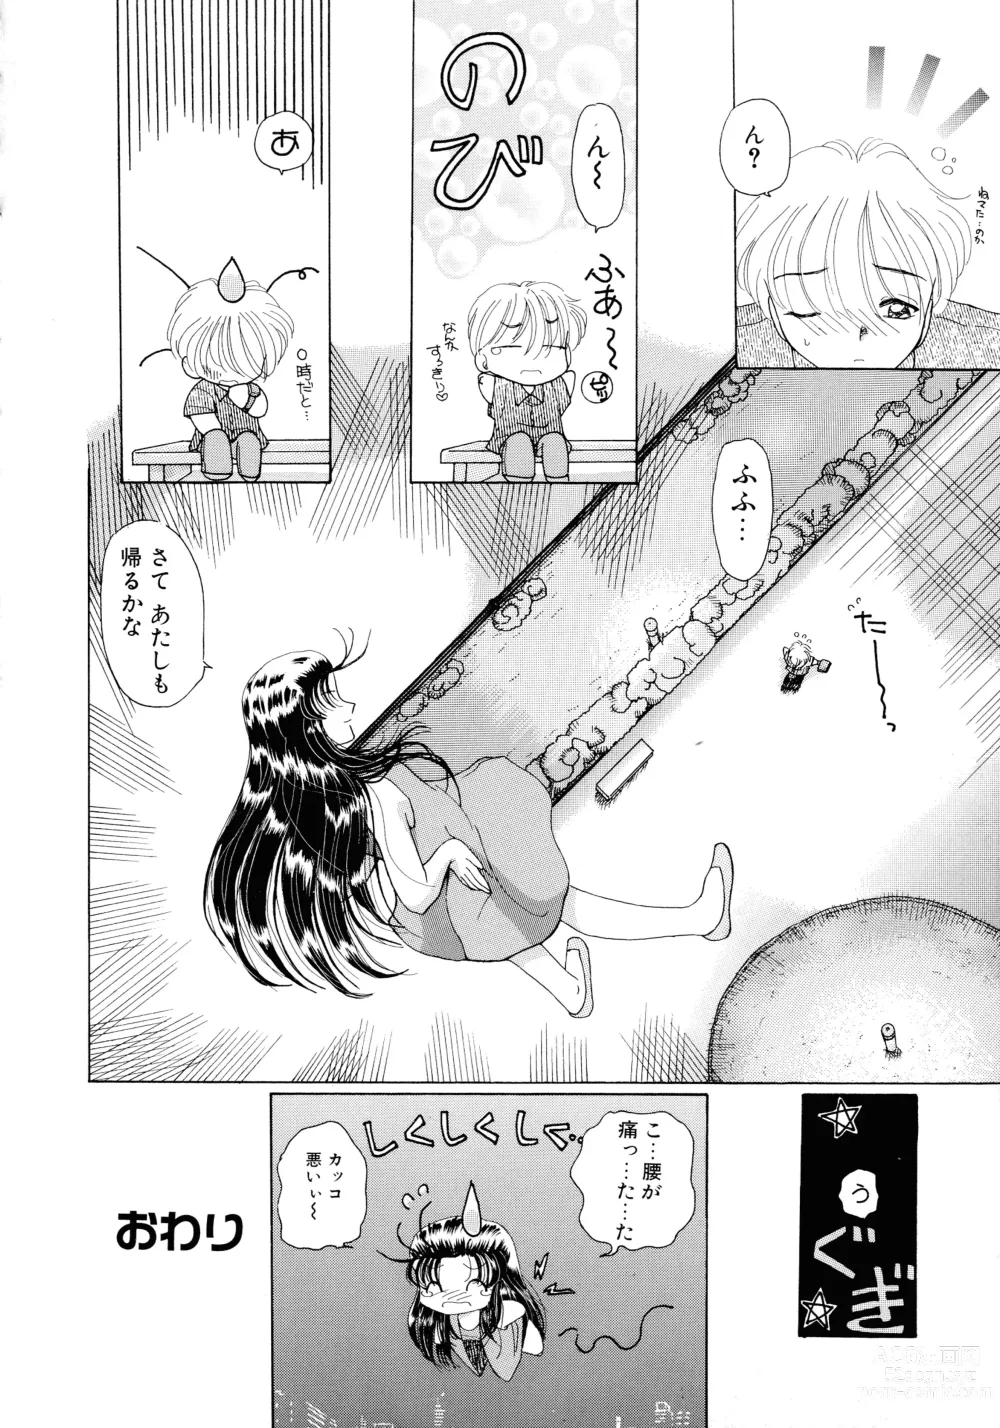 Page 144 of manga Mahou Trouble